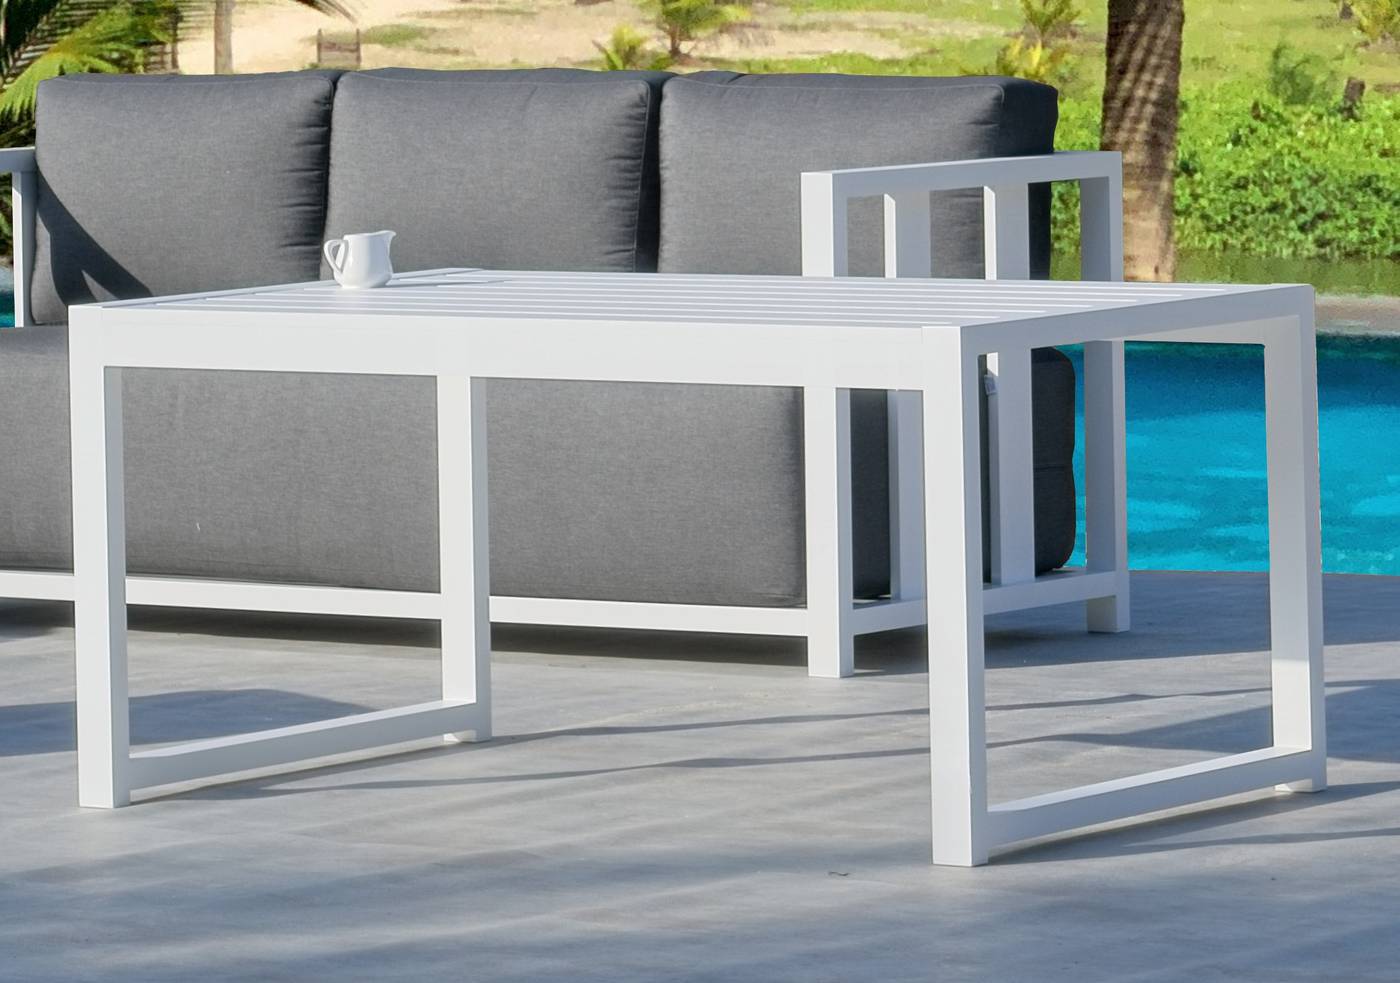 Set Aluminio Ilinois-10 - Conjunto de aluminio con cojines extra grandes: sofá de 3 plazas + 2 sillones + 1 mesa de centro + 2 reposapiés. Colores: blanco, antracita, marrón, champagne o plata.